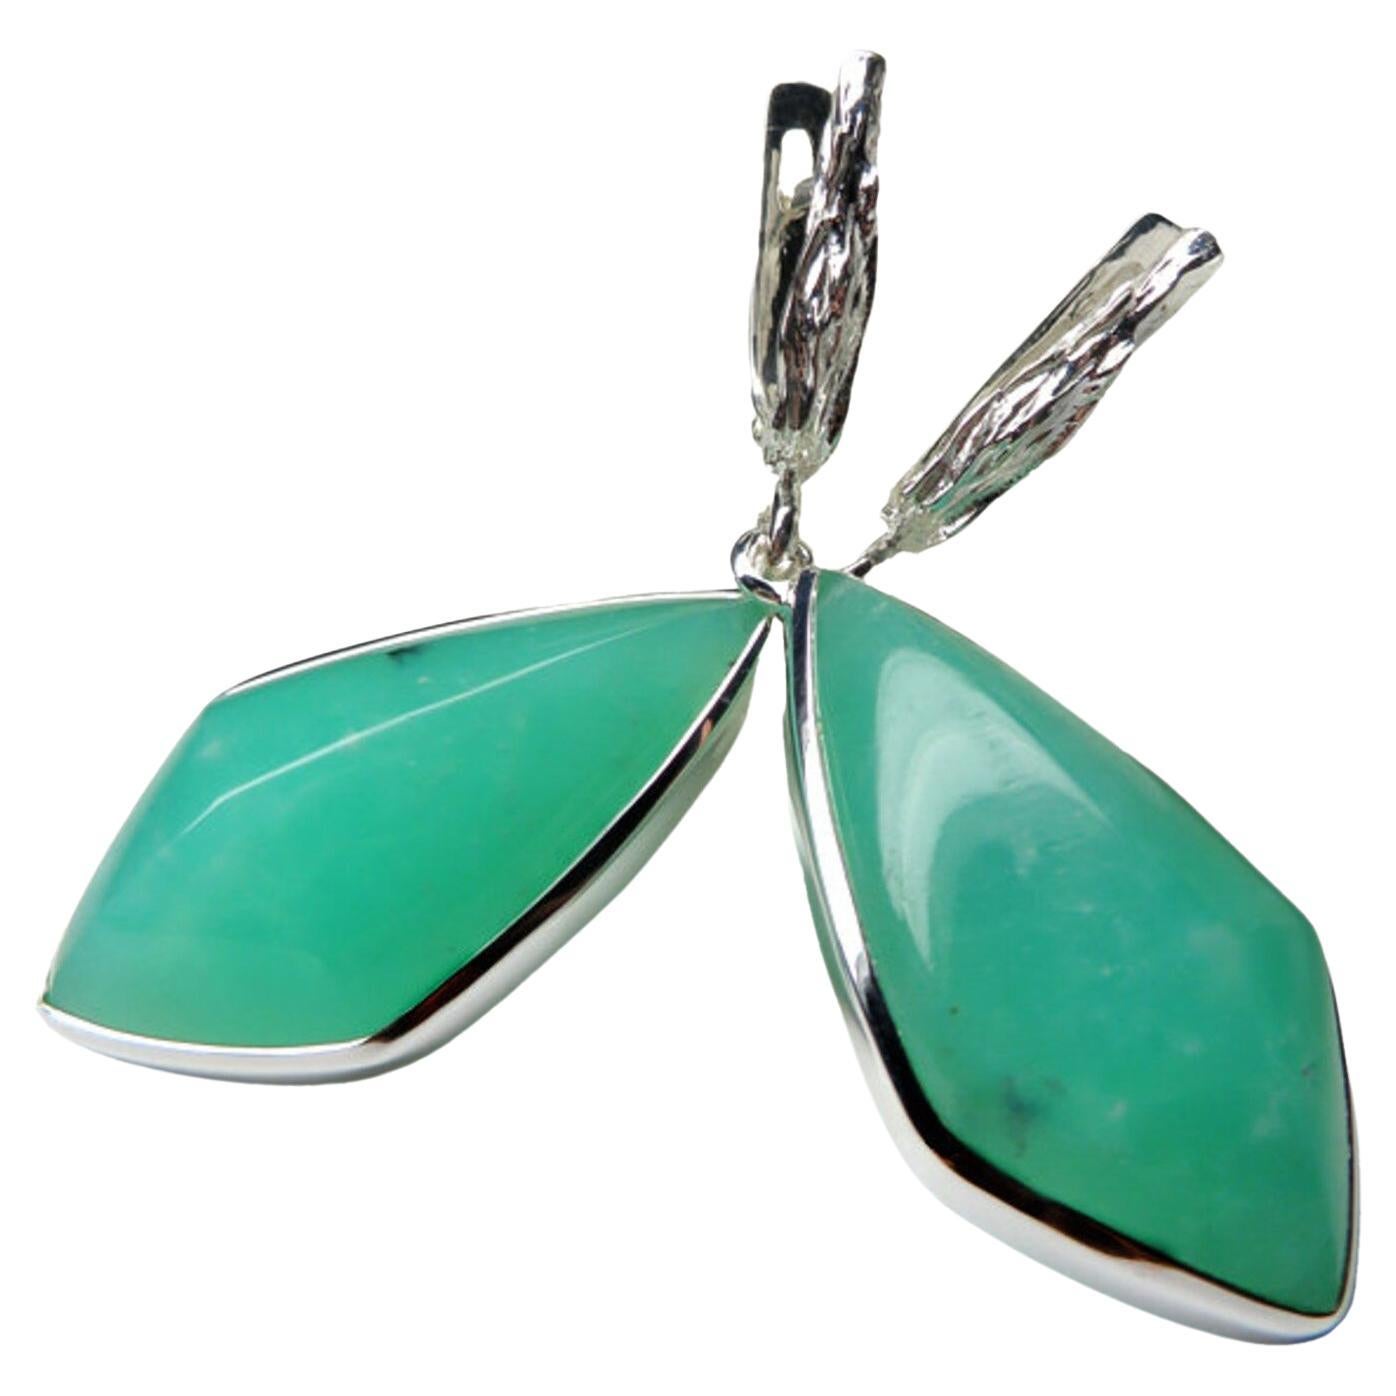 Big Chrysoprase Earrings silver Kite Shaped Luminous Mint Green Natural Gemstone